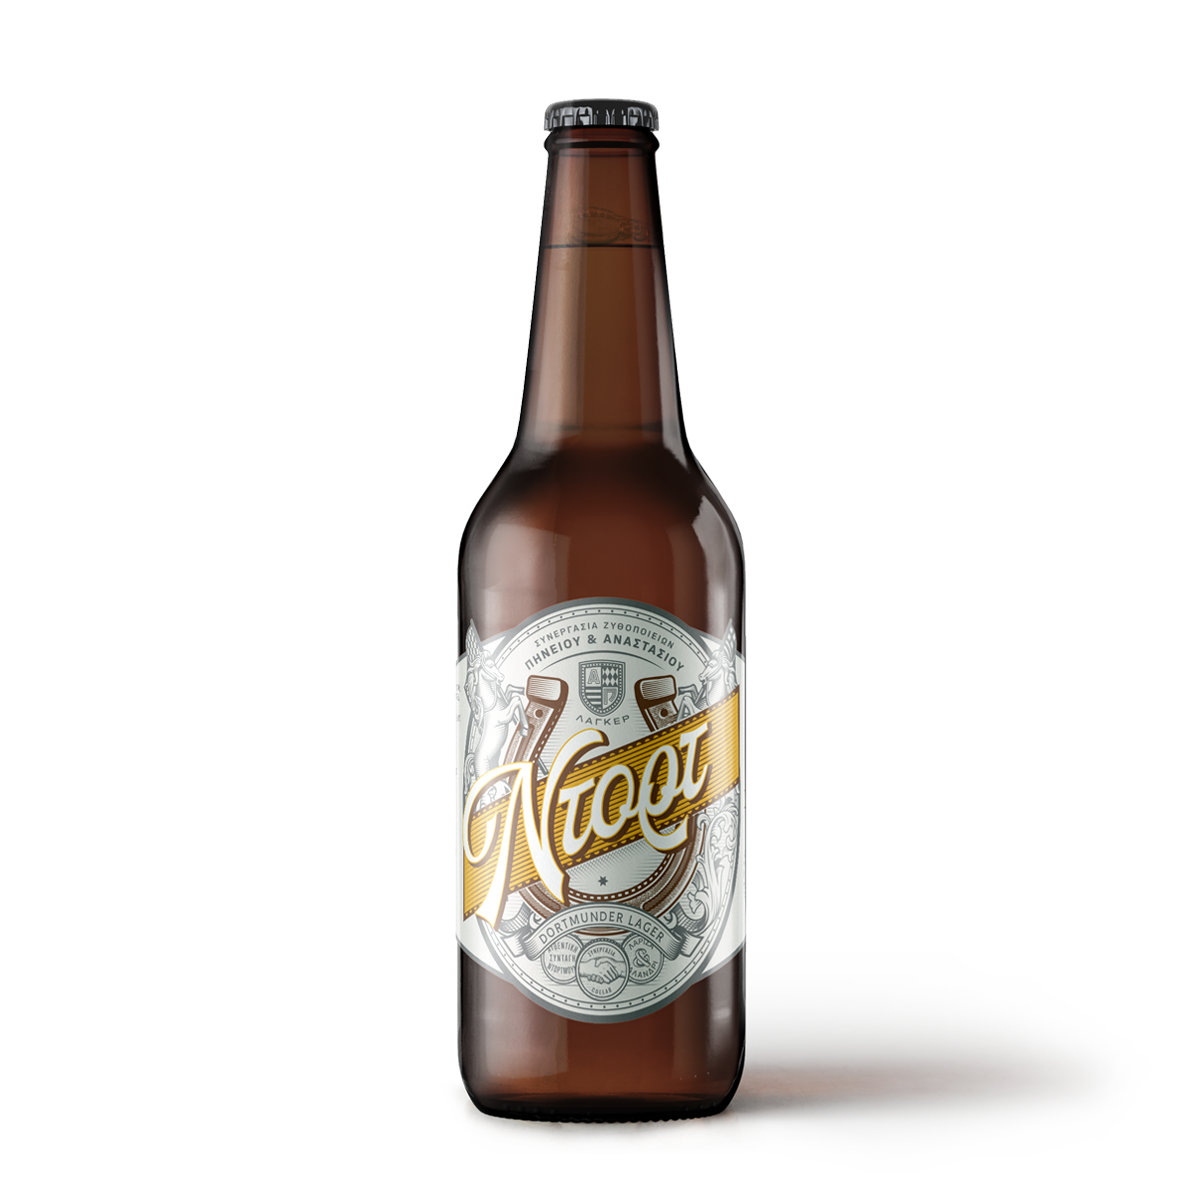 Amsterdam Lager Premium Beer - Noroit Distribution